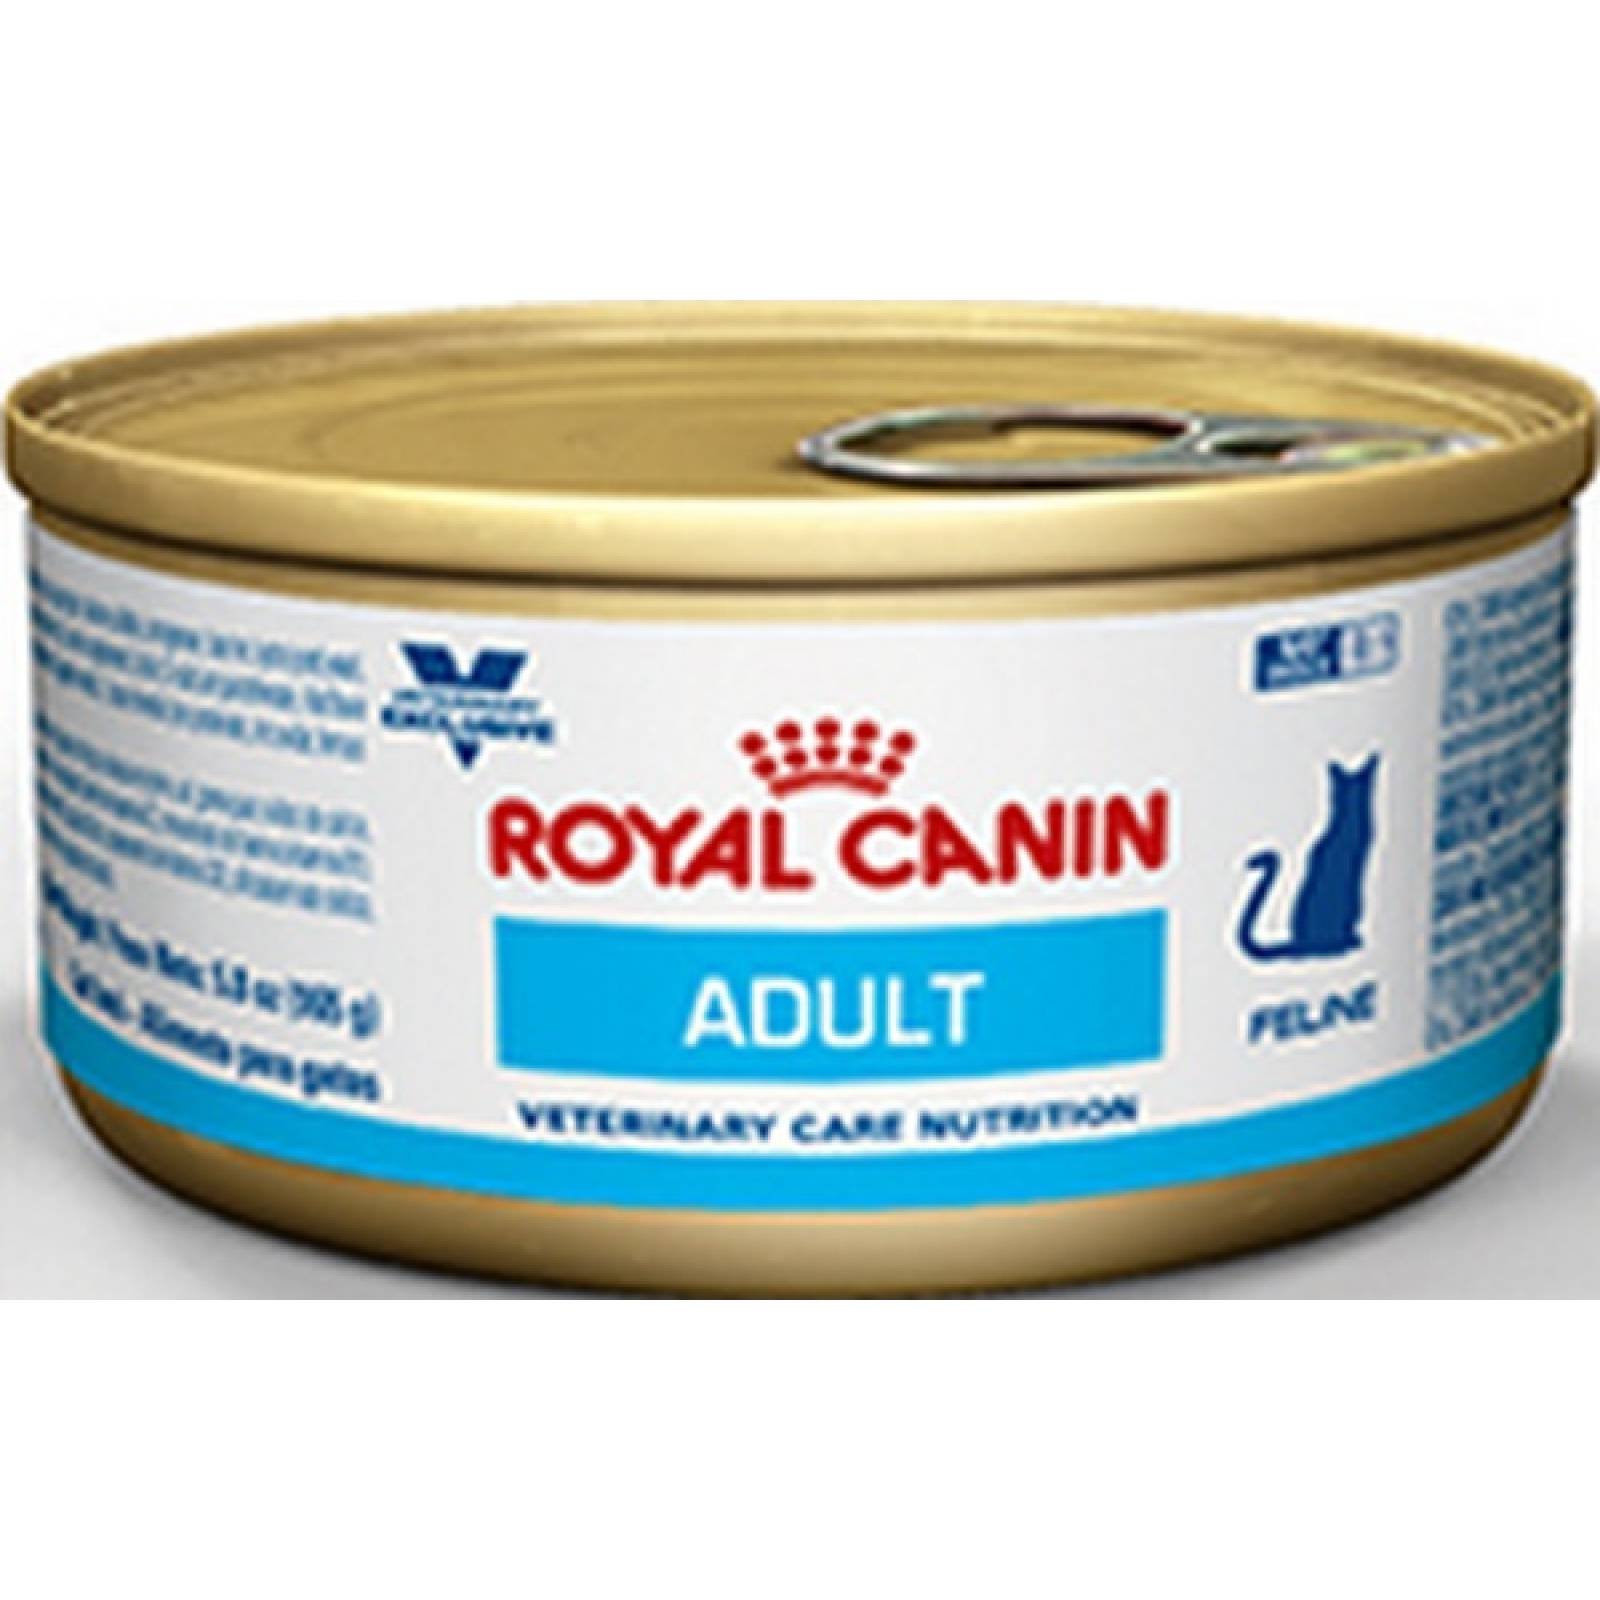 Royal Canin Dieta Veterinaria Alimento Humedo para Gato Adulto lata 165 g